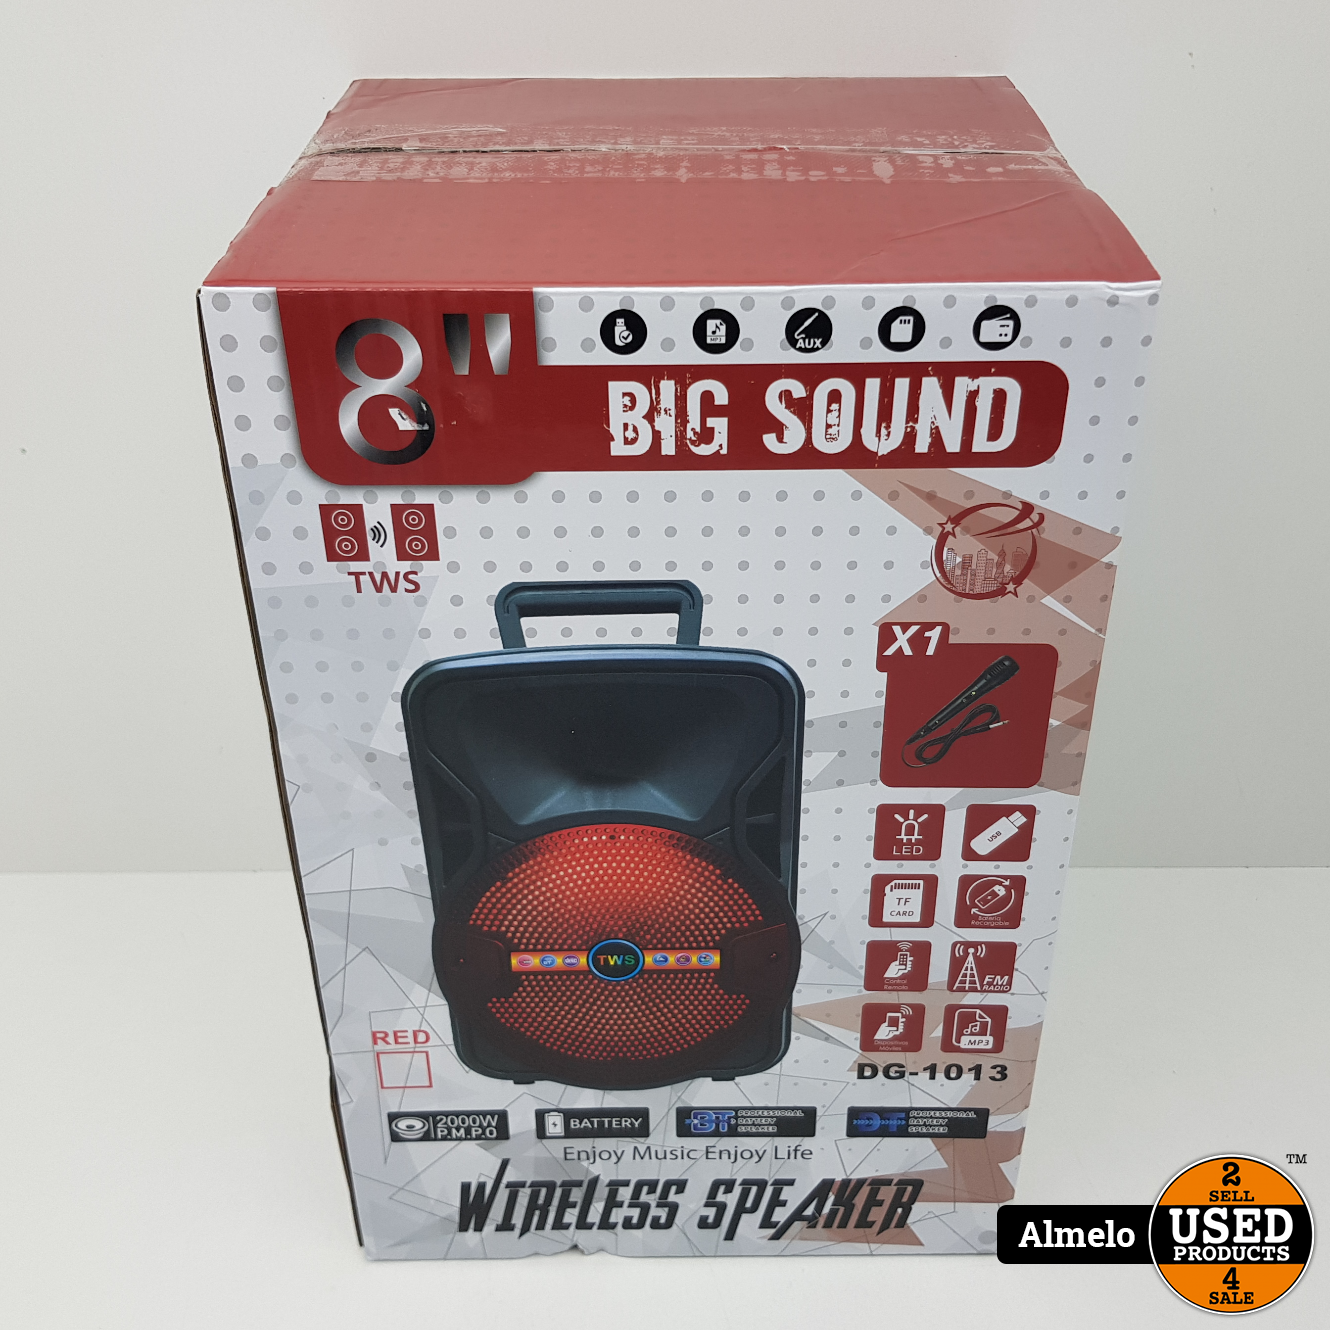 Onderdrukking Geen Senator Big sound Big Sound 8 inch Wireless speaker Black *nieuw geseald* - Used  Products Almelo